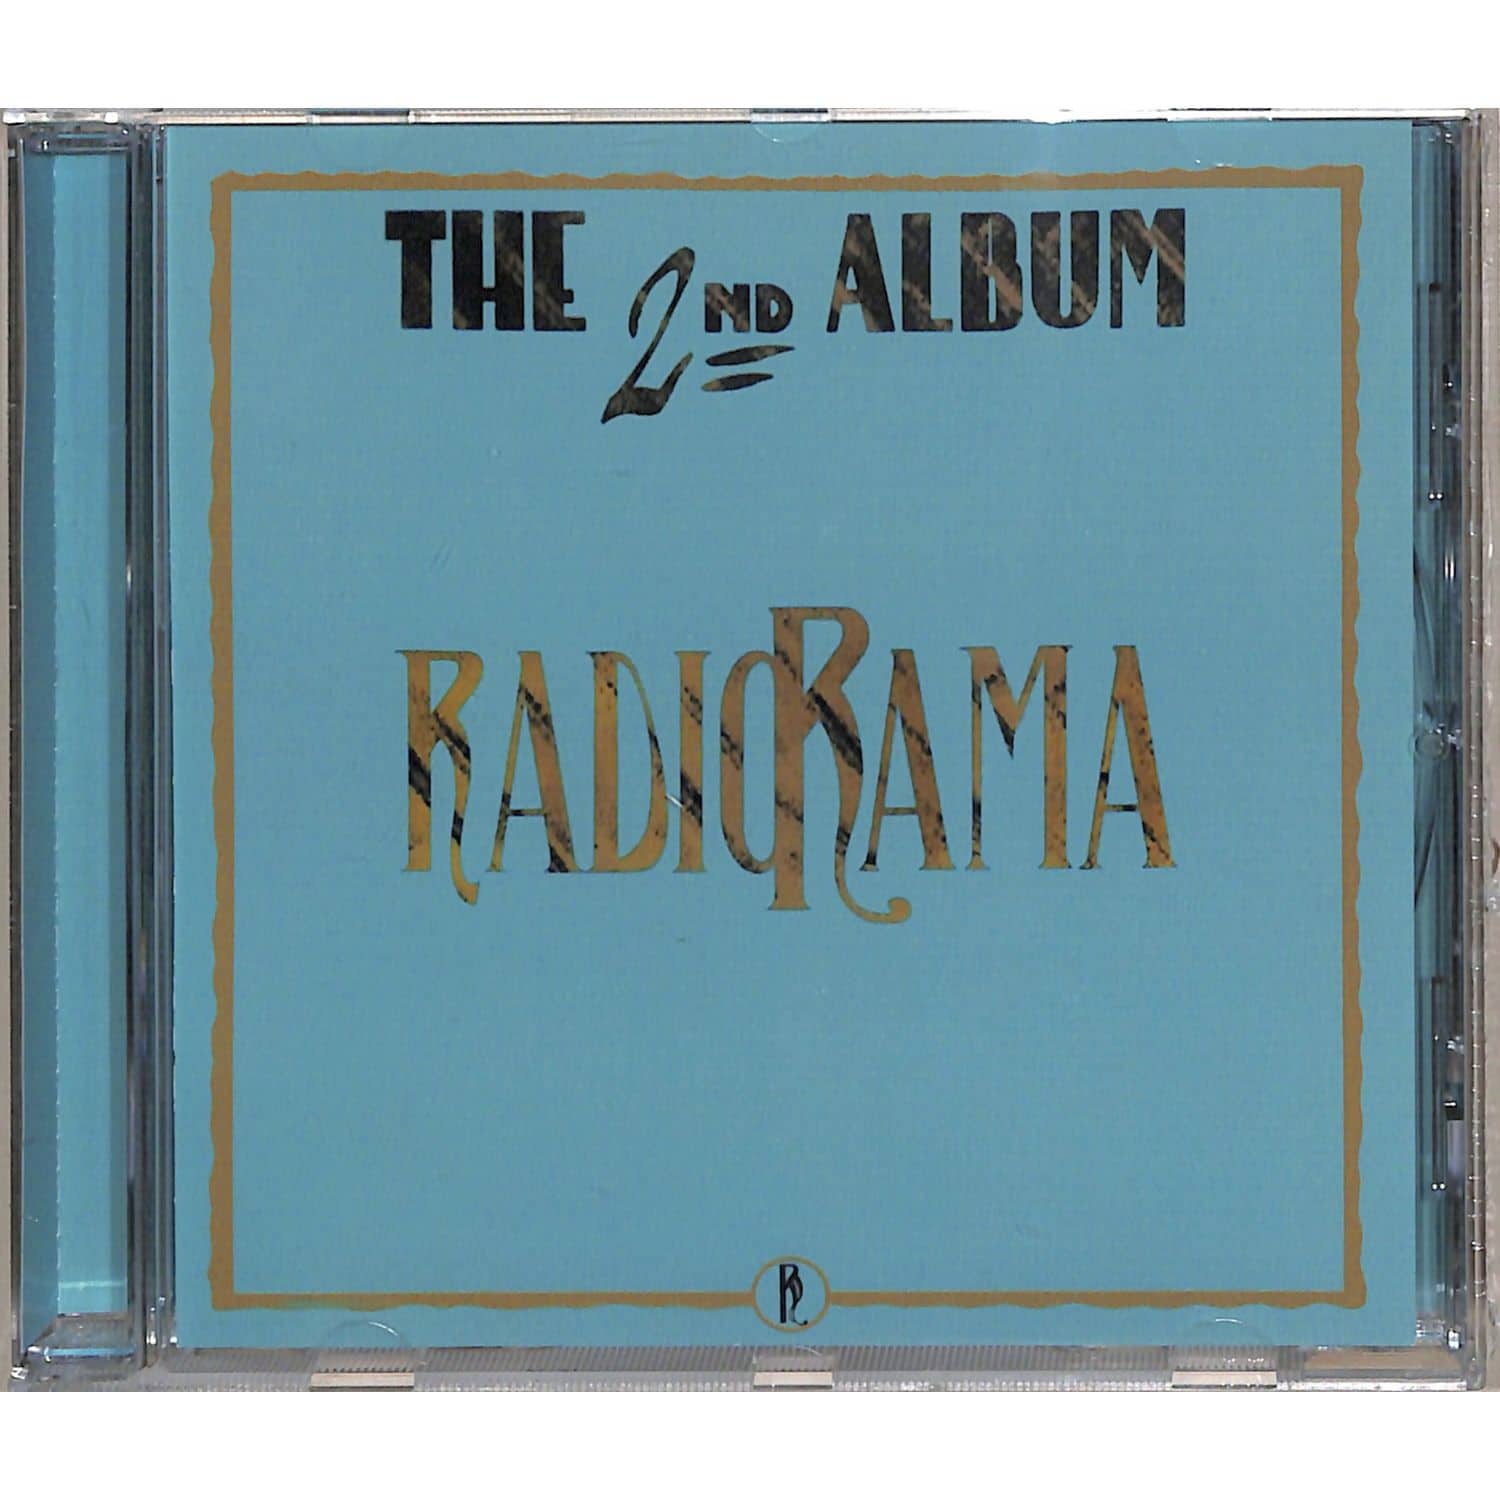 Radiorama - THE 2ND ALBUM 